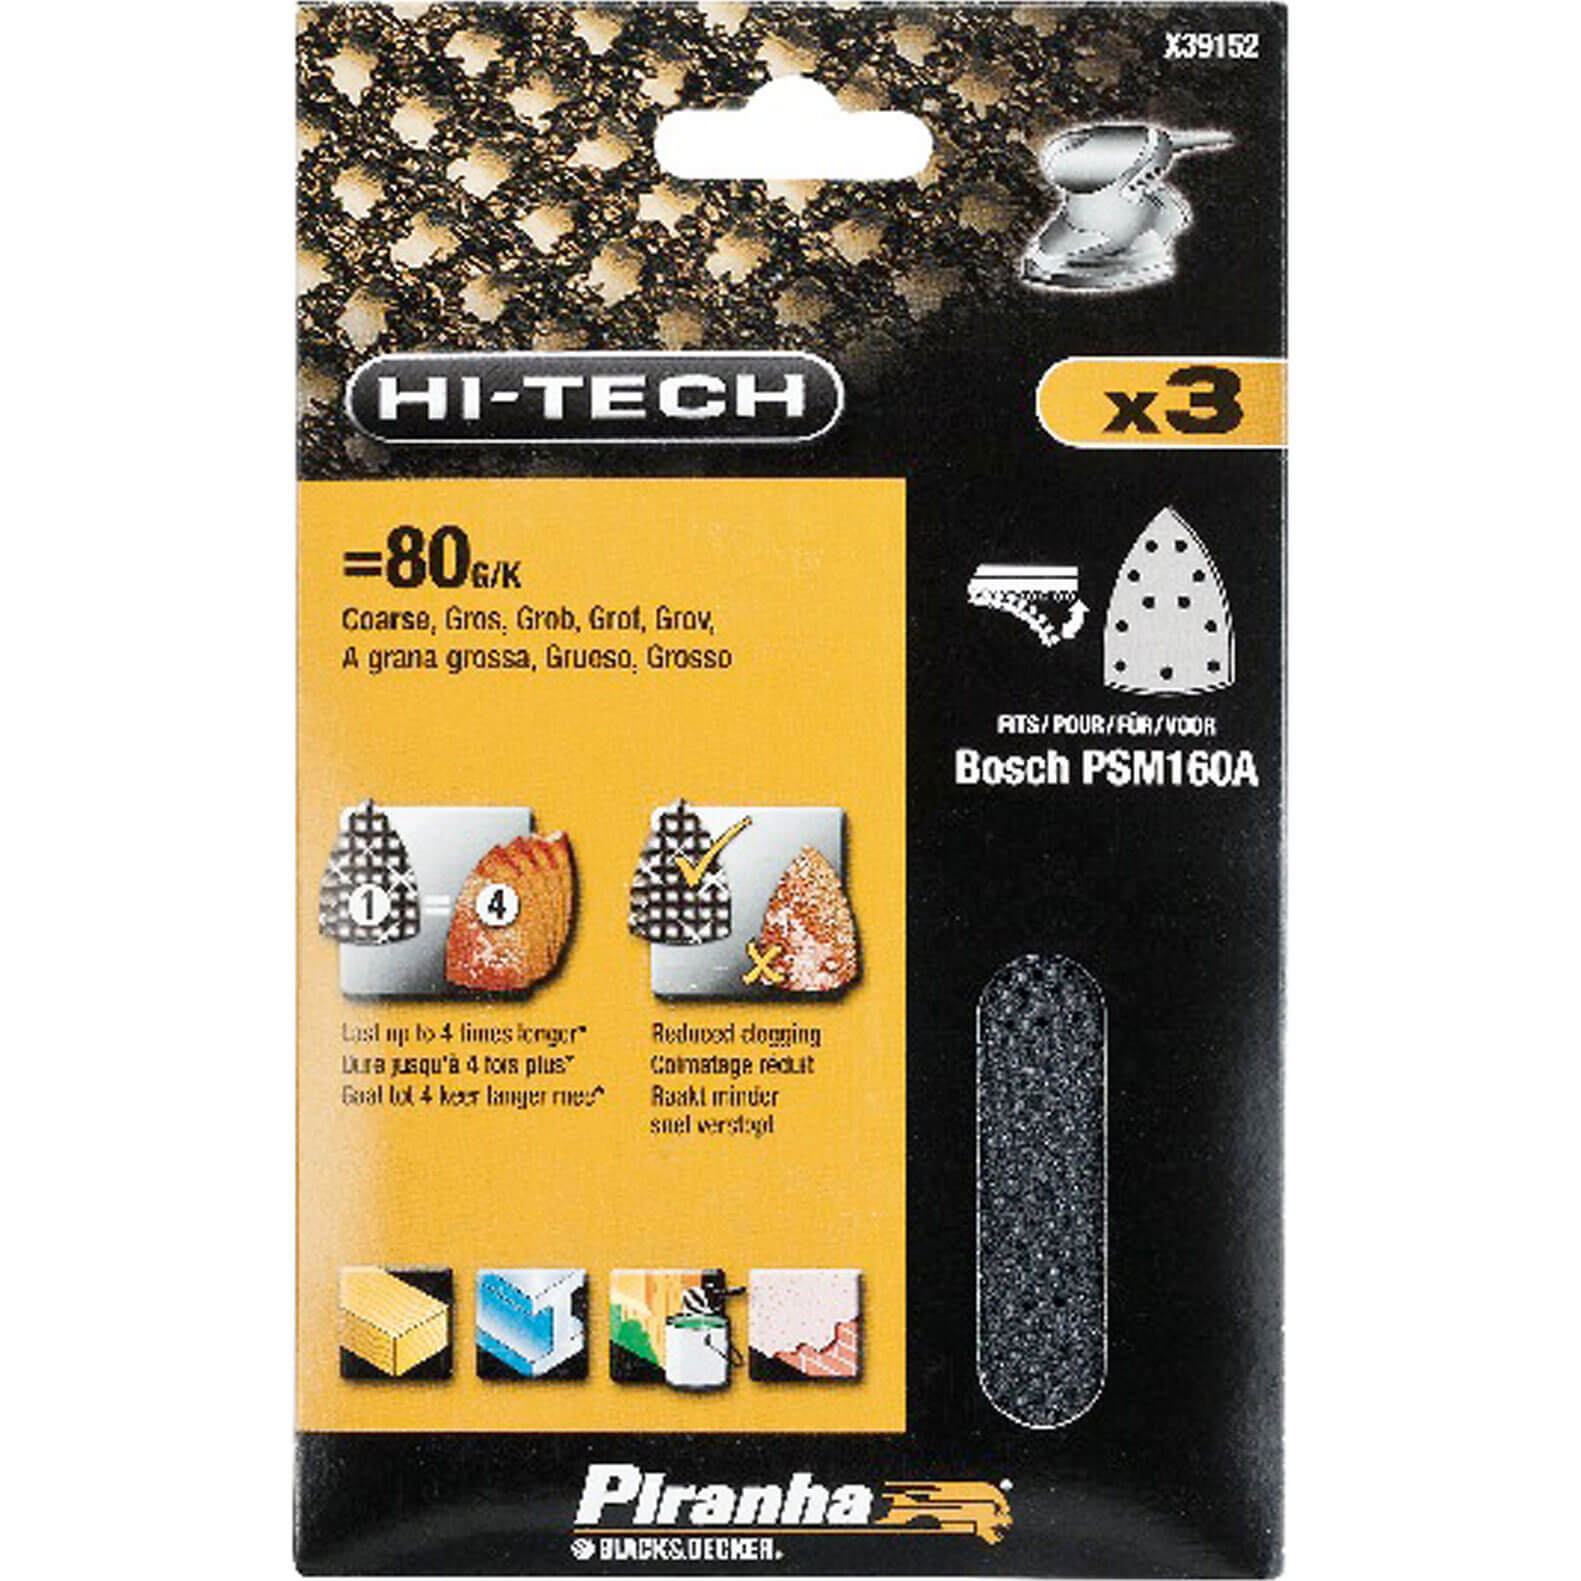 Image of Black and Decker Piranha Hi Tech Quick Fit Multi Sander Delta Sanding Sheets 80g Pack of 3